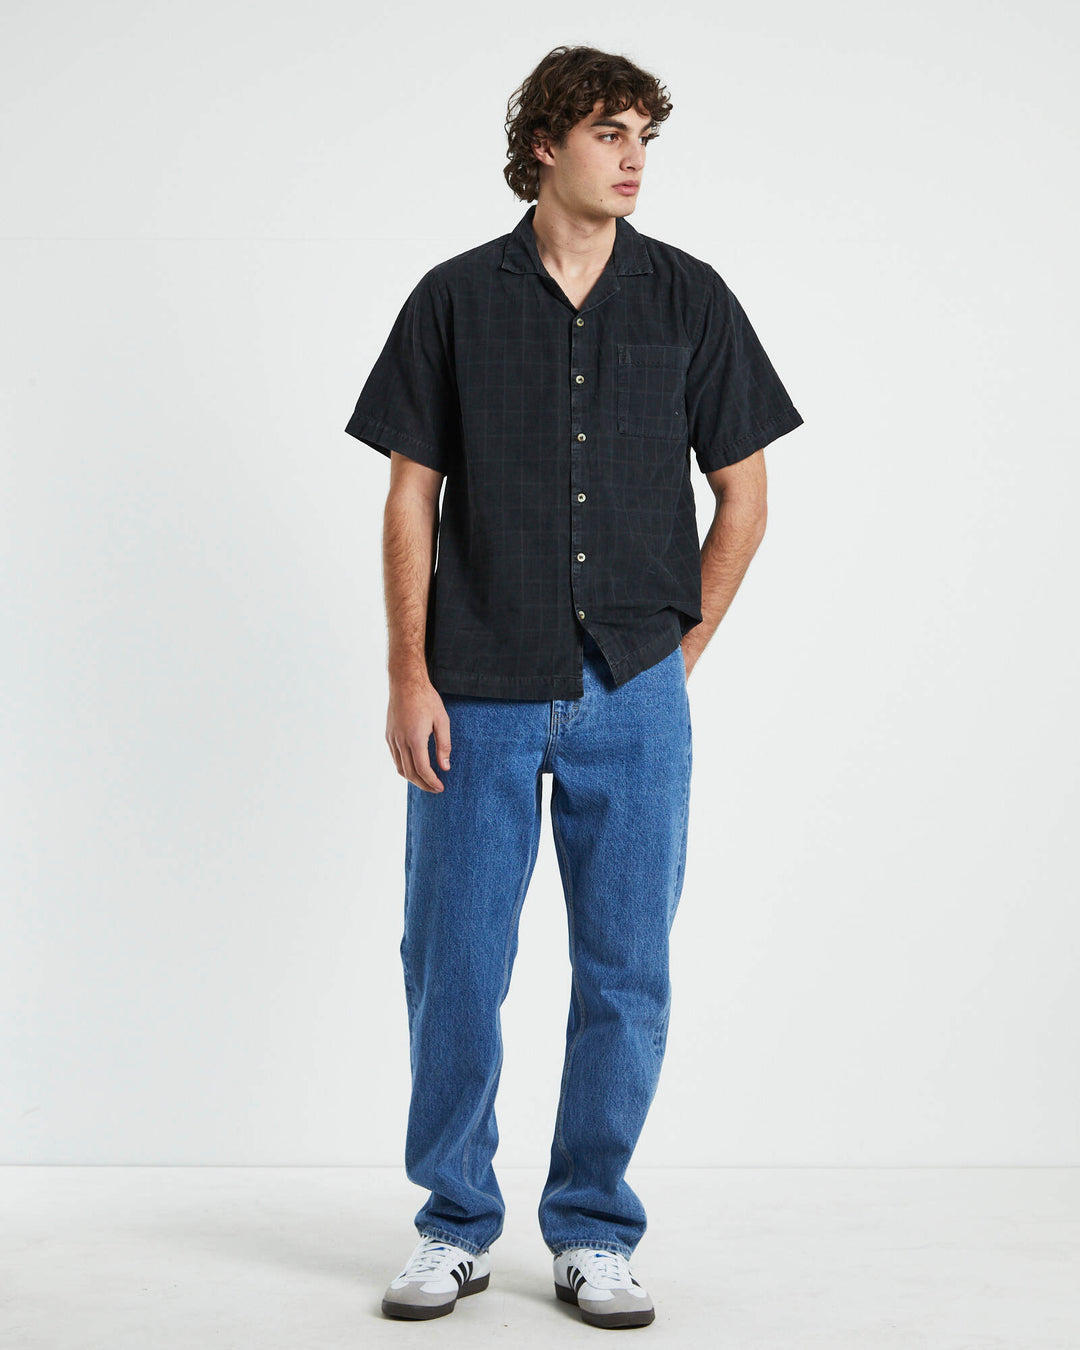 Rollas Tile Cord Bowler Shirt - Sulphur Black